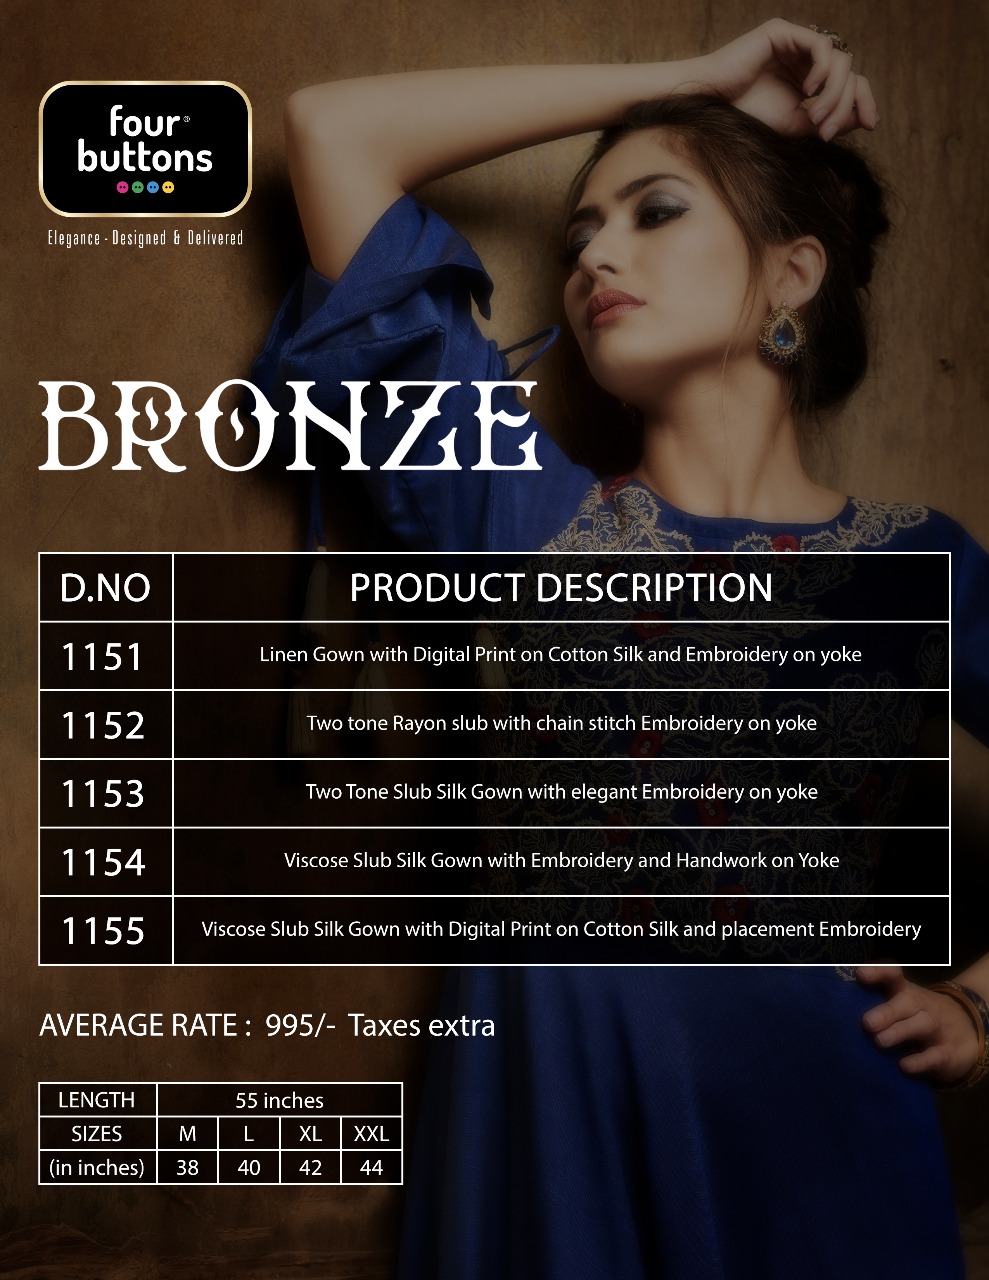 Four buttons bronze stylish designer party wear gowns concept